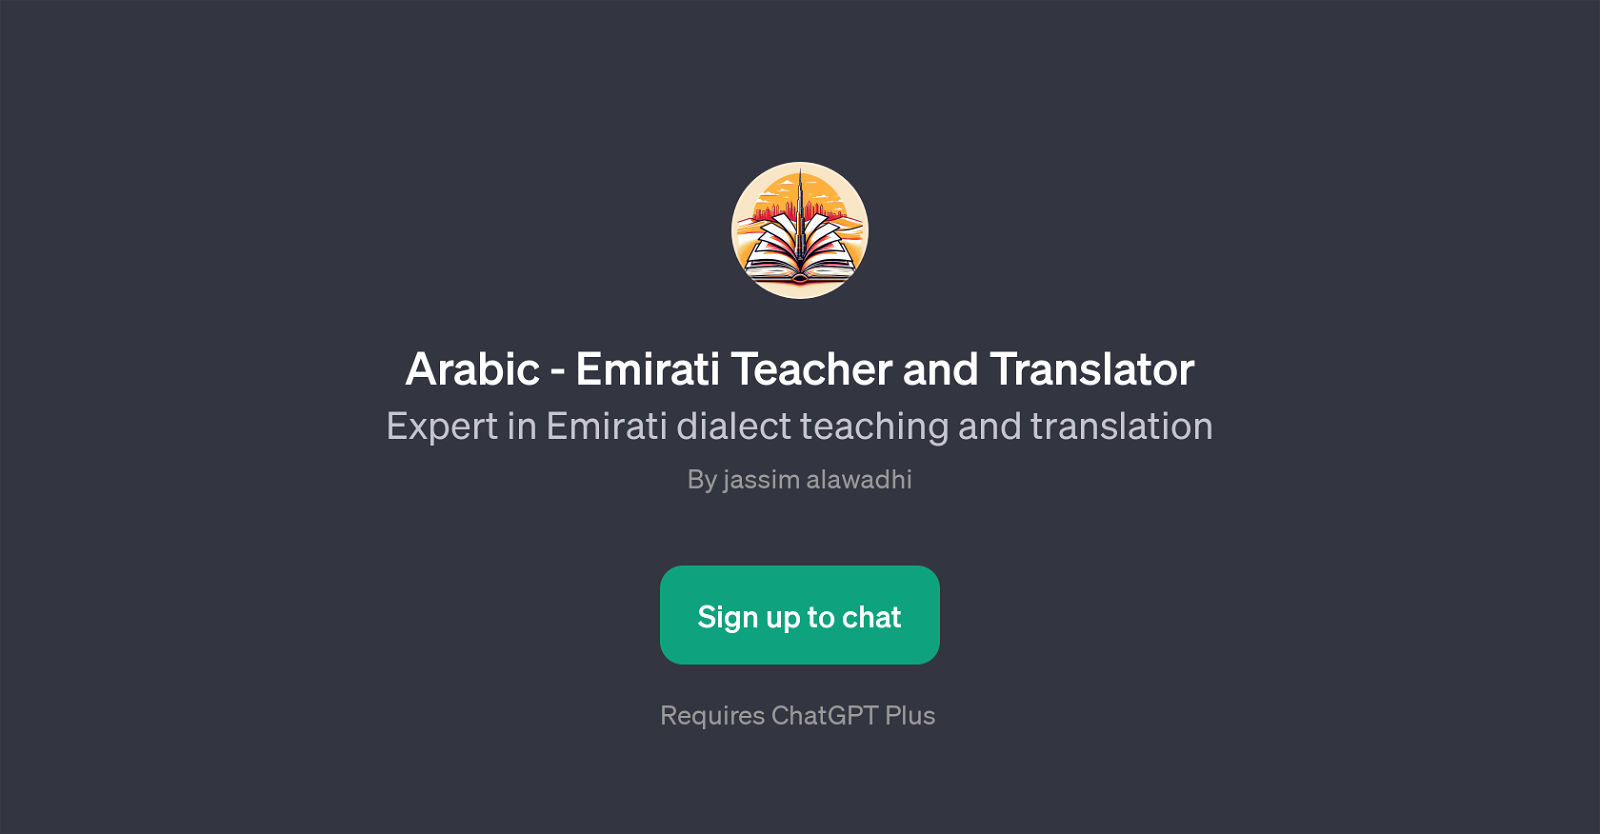 Arabic - Emirati Teacher and Translator website